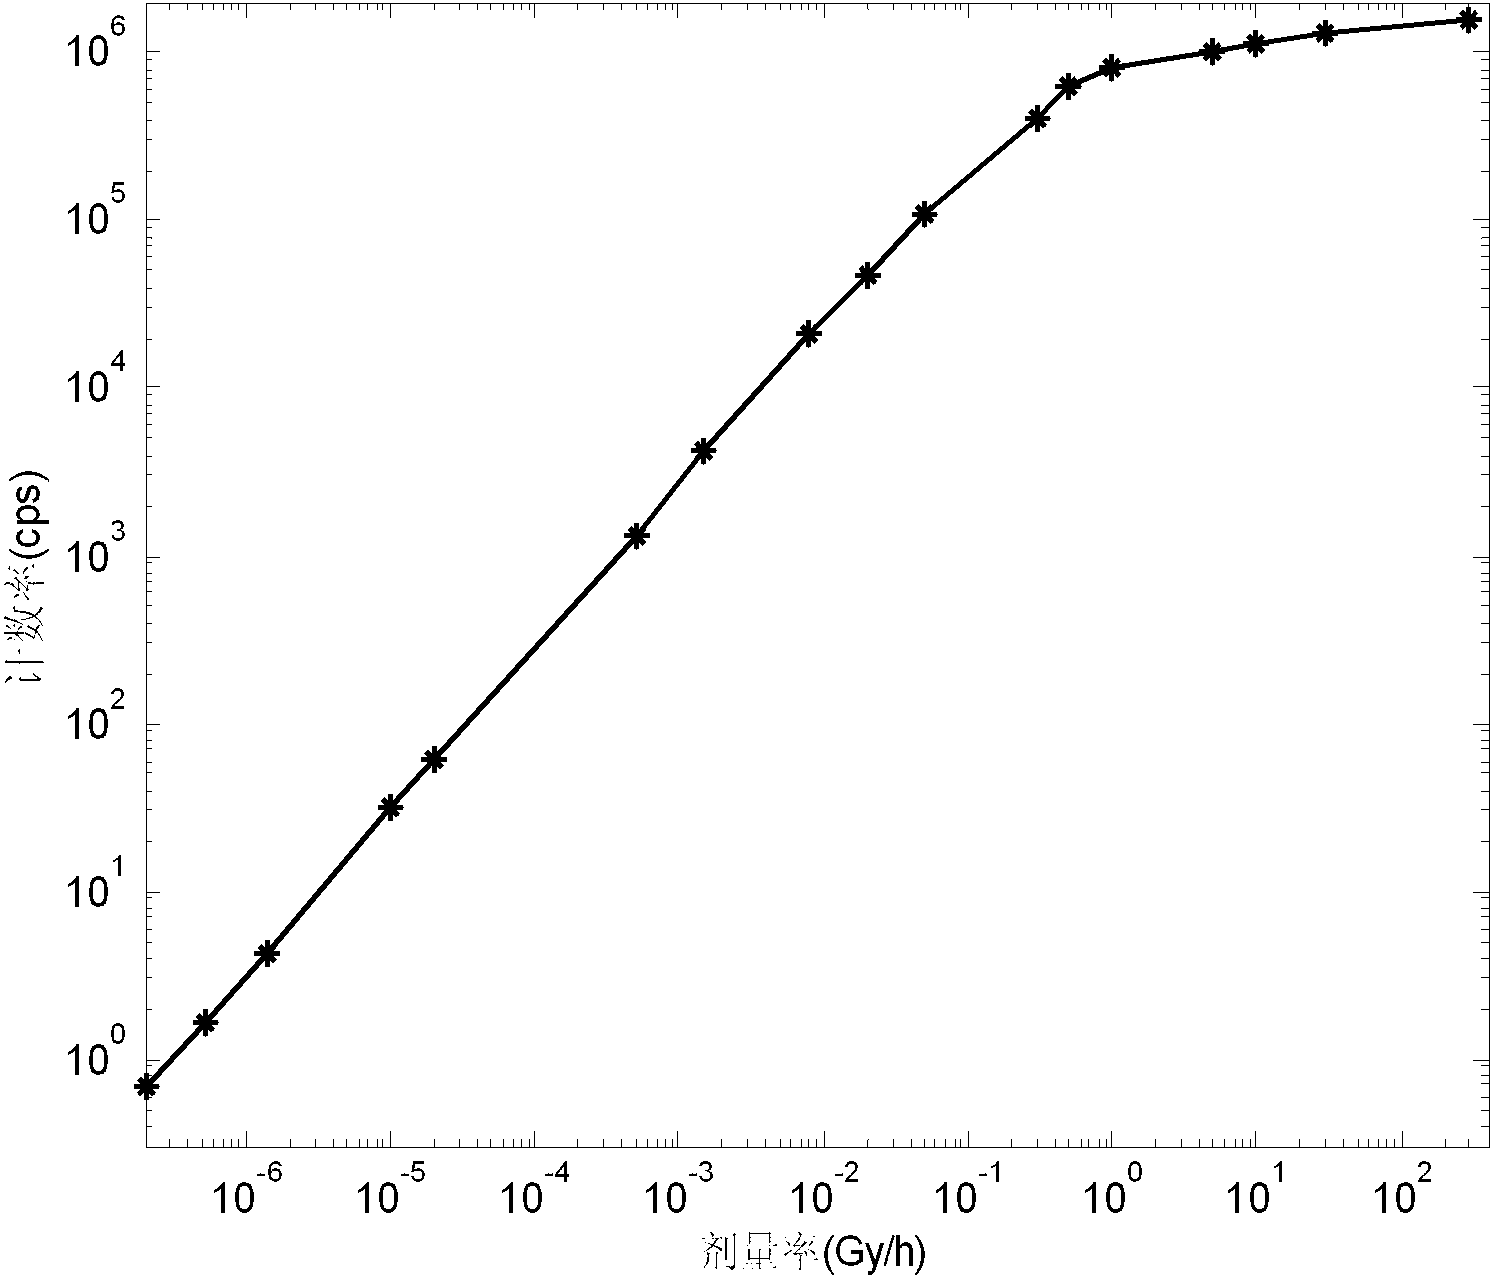 Single-GM counting tube wide-range radiation detection method